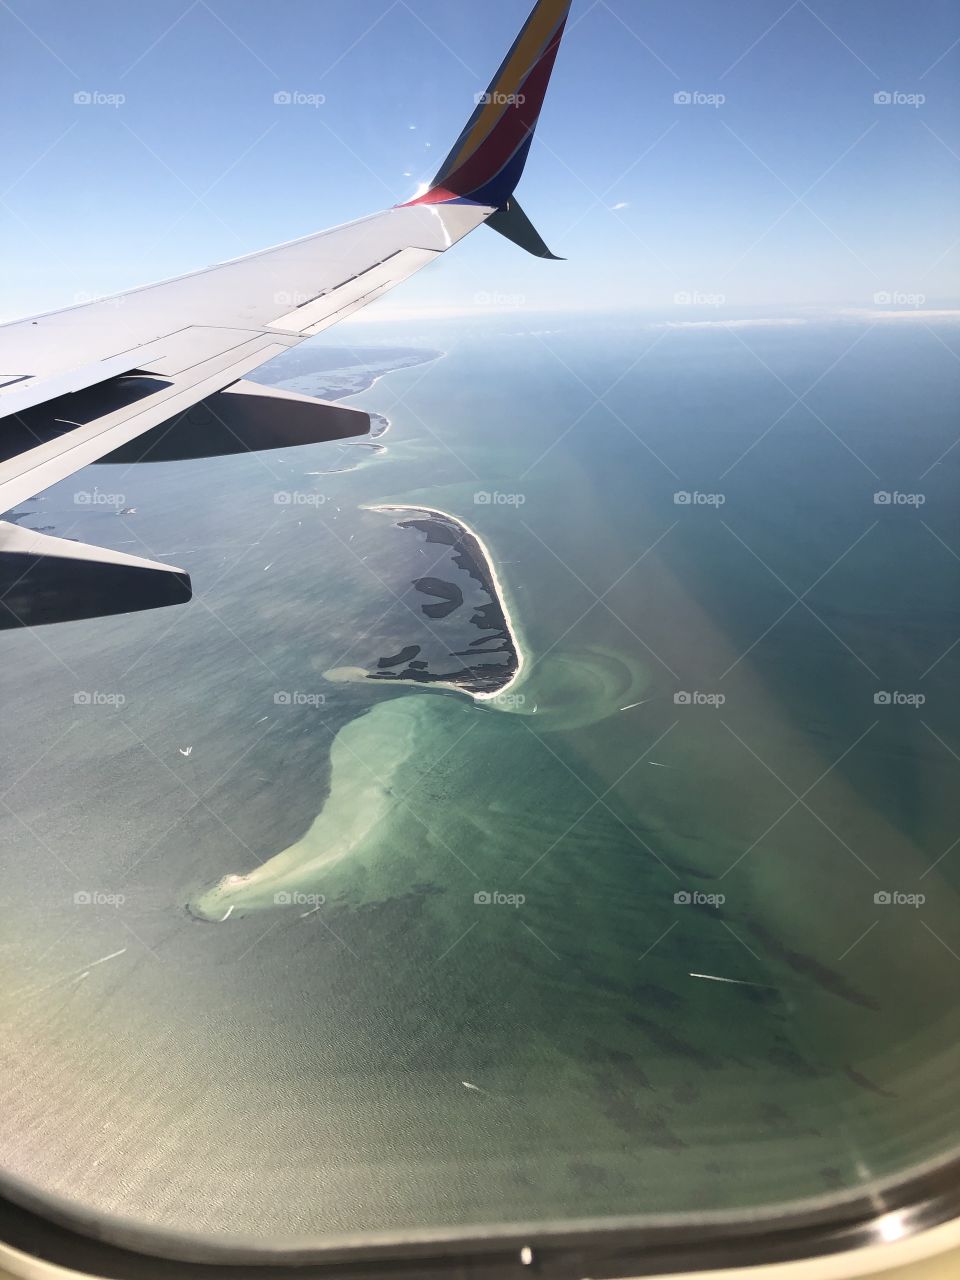 Flight over green ocean and a sandbar